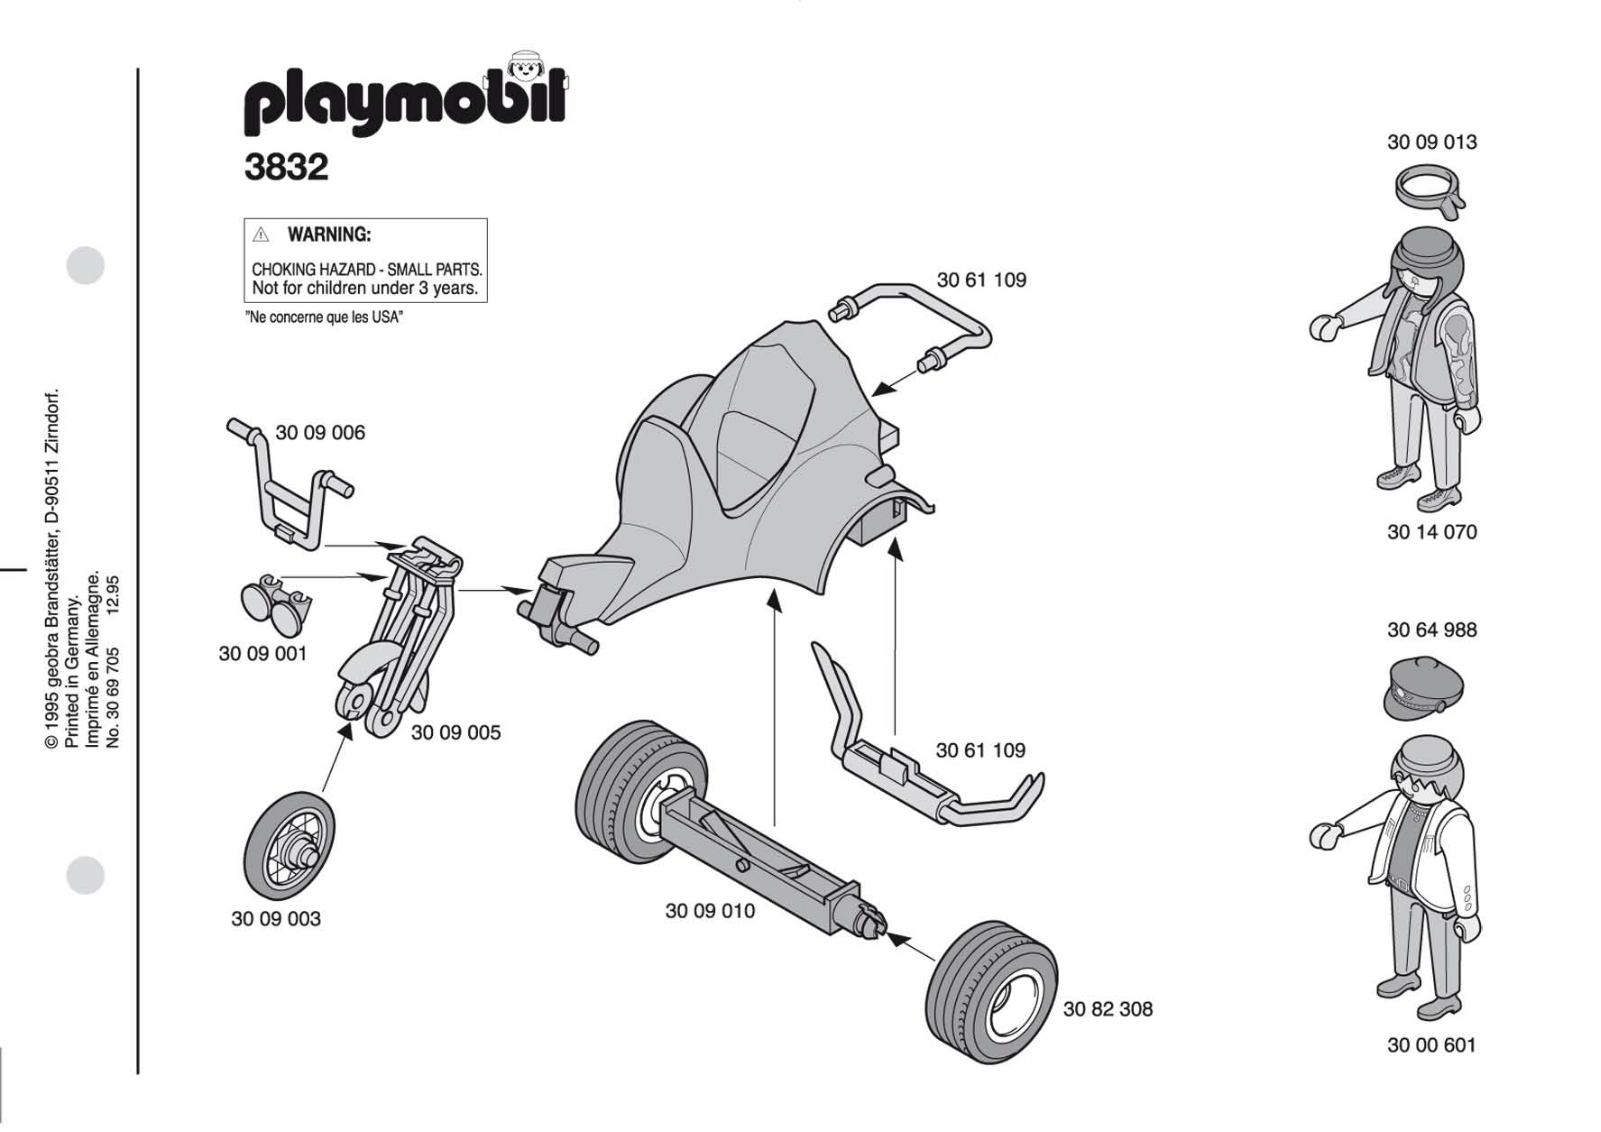 Playmobil 3832 Instructions